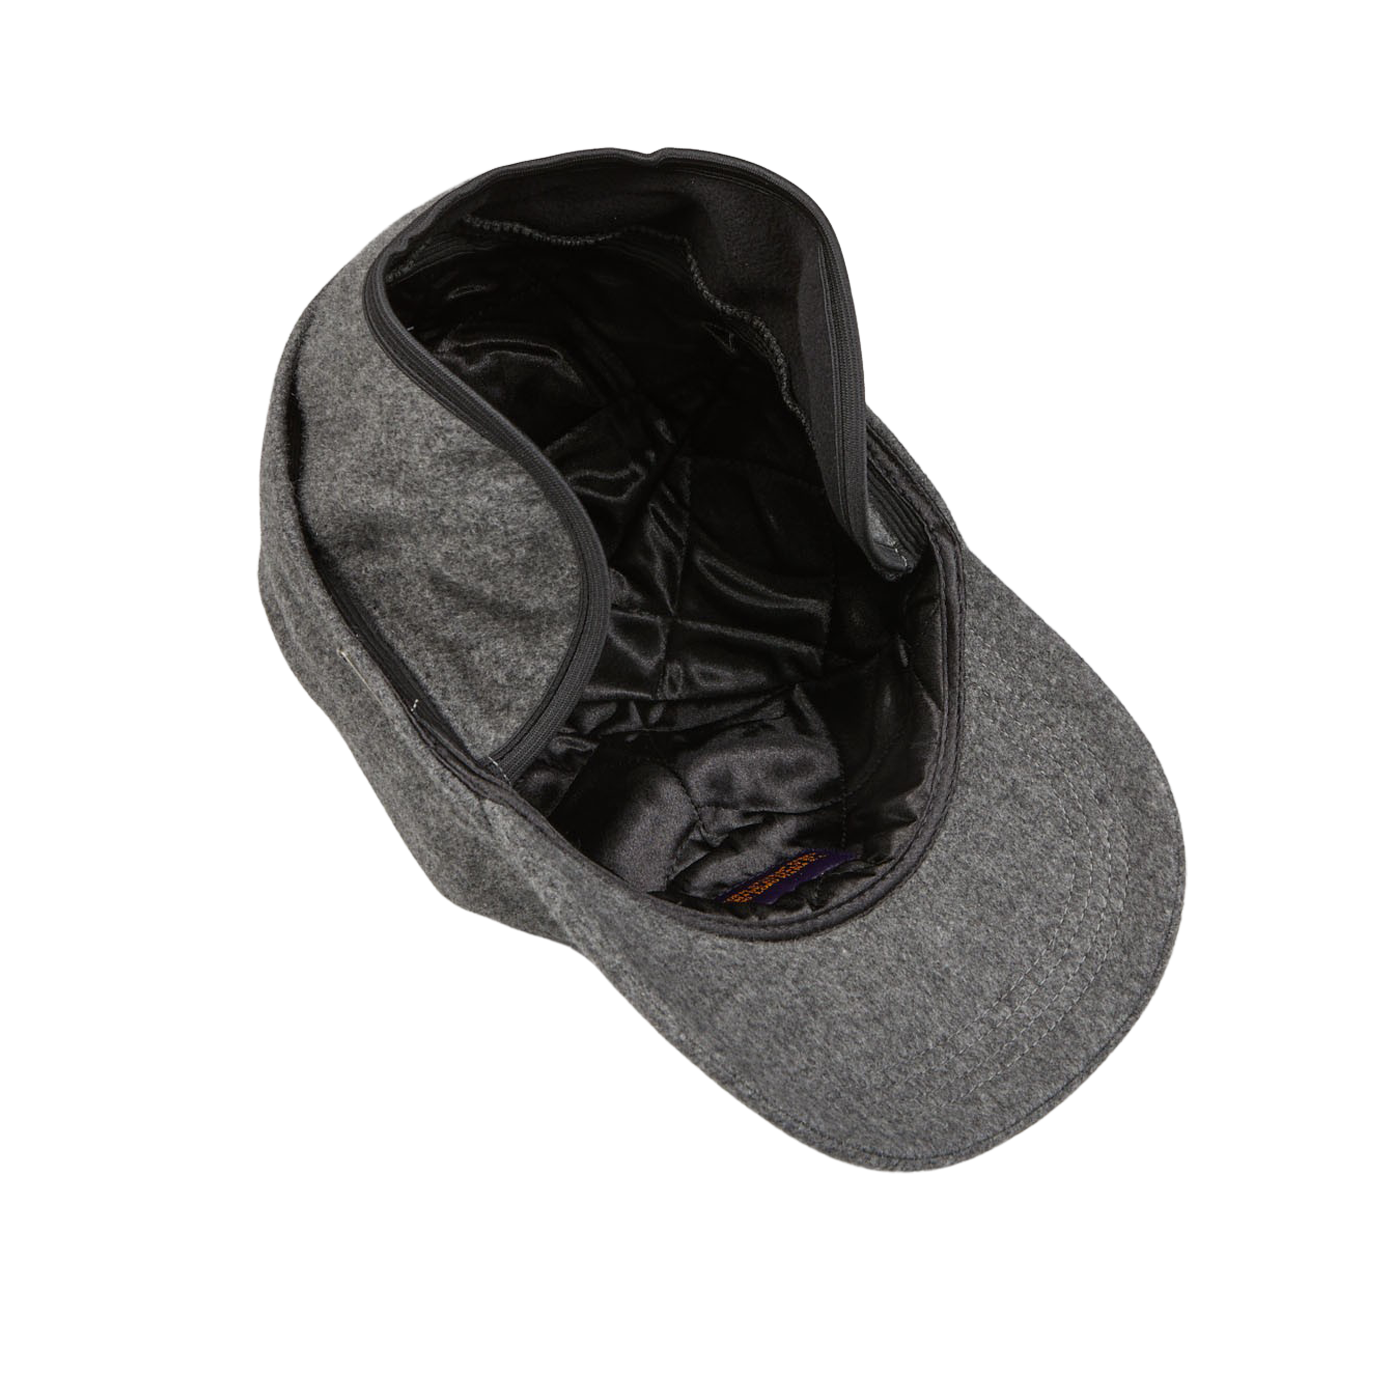 A Grey Loro Piana Cashmere Baseball Cap by Wigéns.